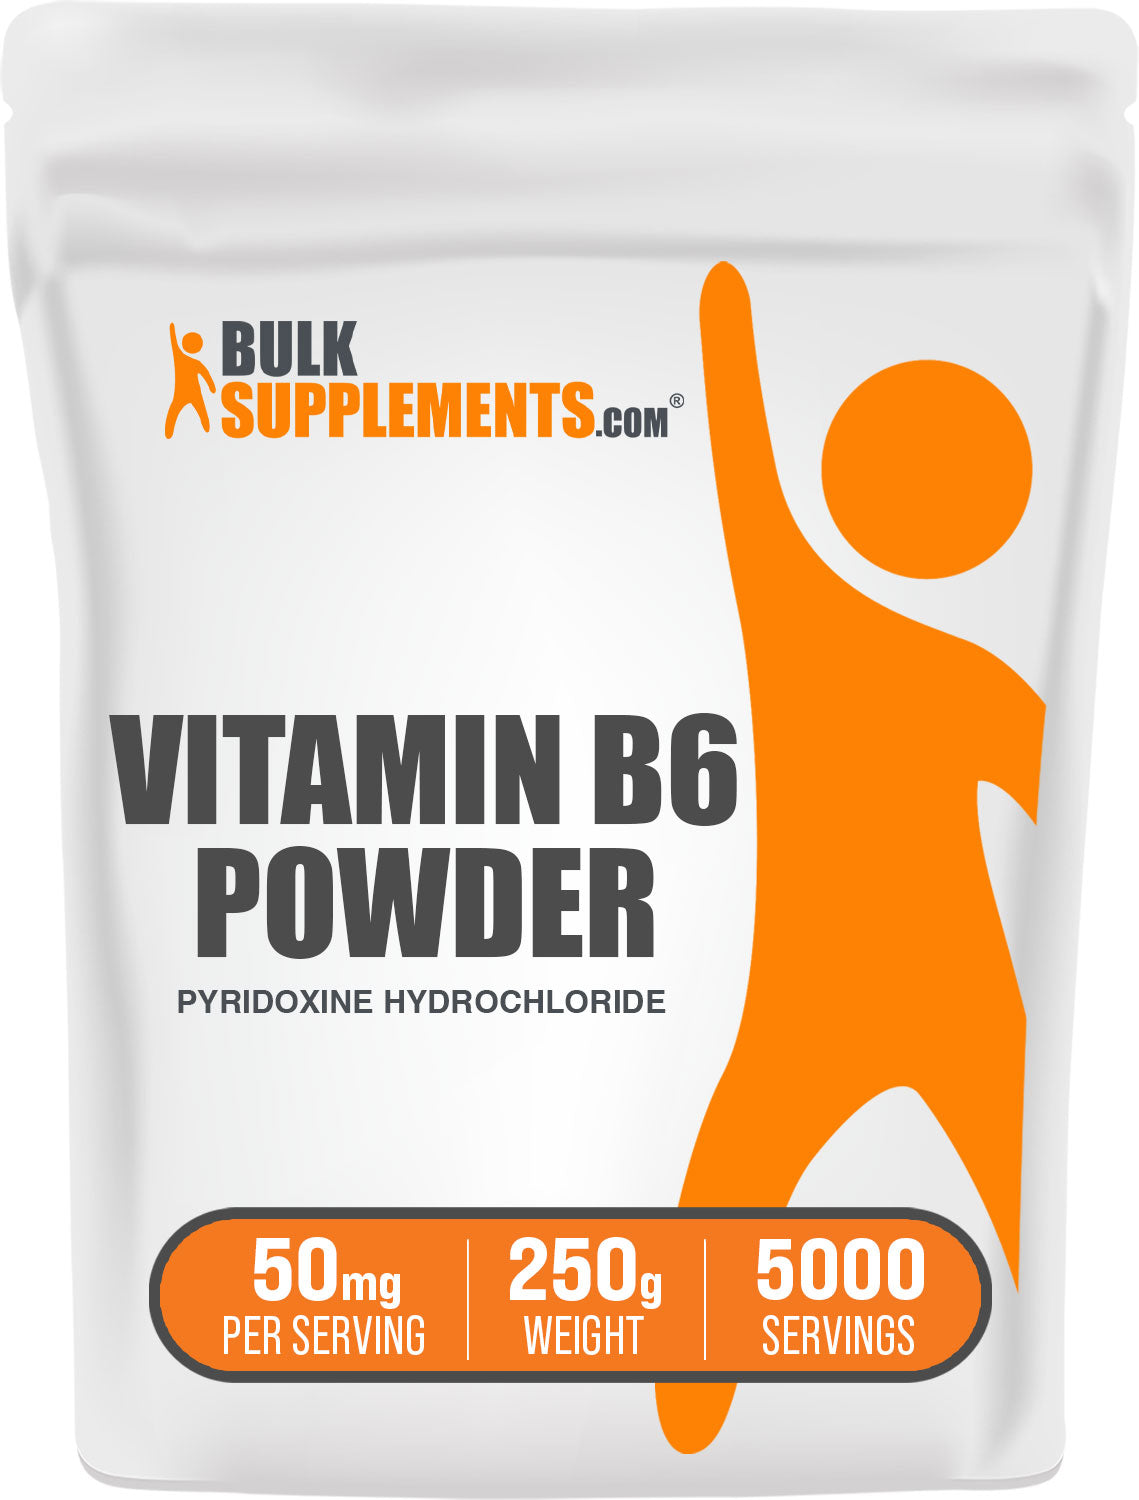 BulkSupplements Vitamin B6 Powder Pyridoxine Hydrochloride 250g bag